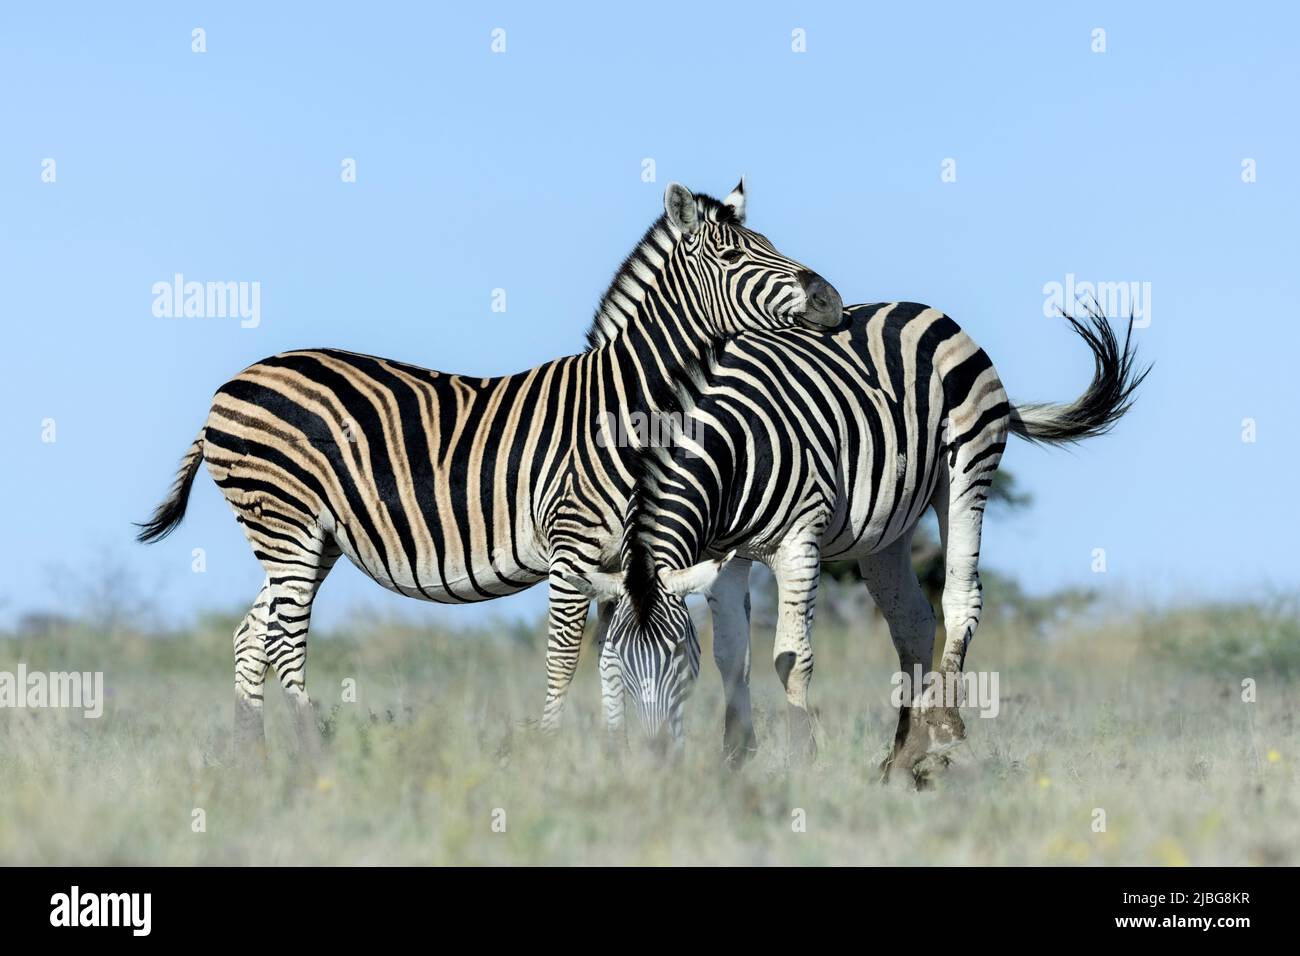 Zebra in kalahari smiling playing with Acacia backdrop in grassland savannah Stock Photo